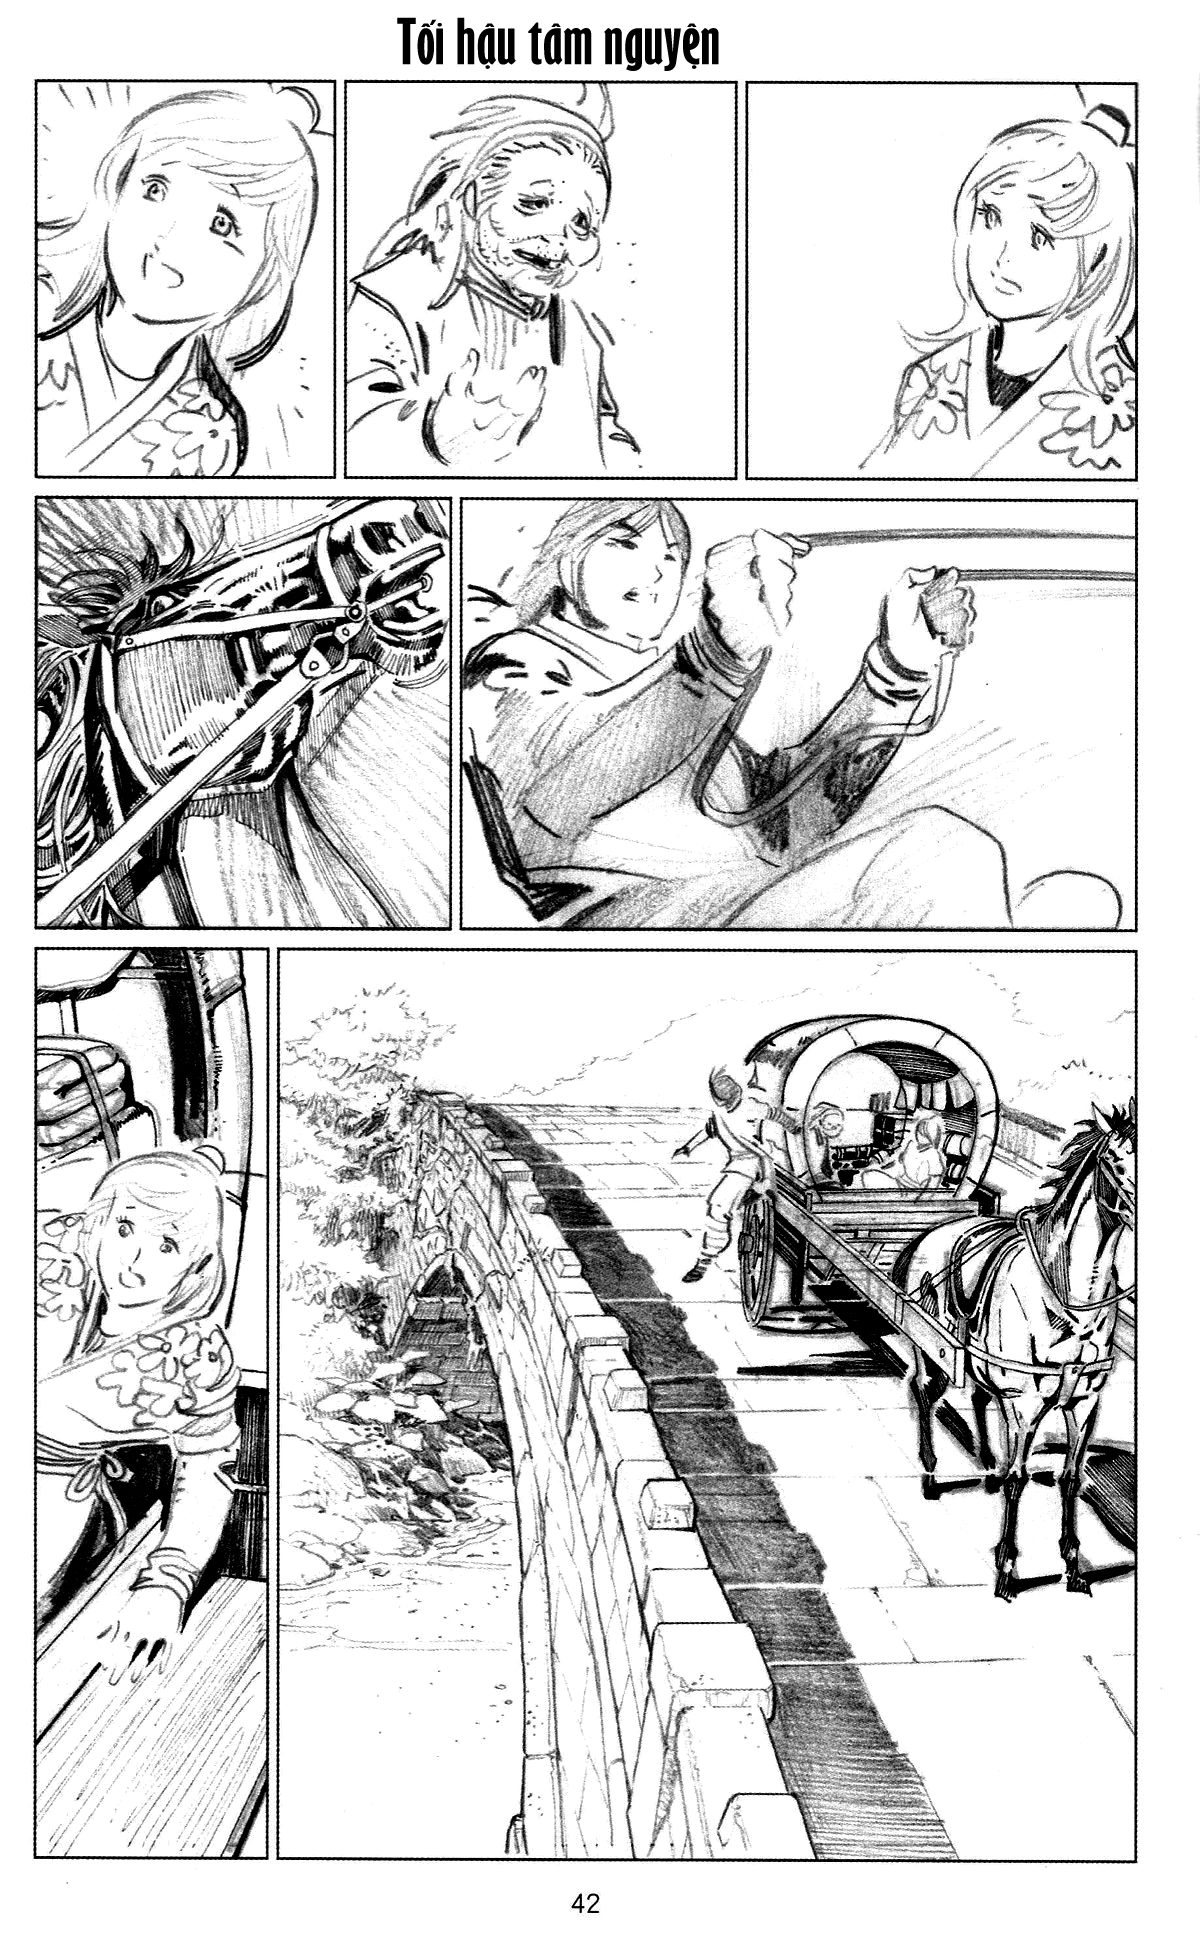 Phong Vân chap 675 (tựa mỗi trang) trang 39